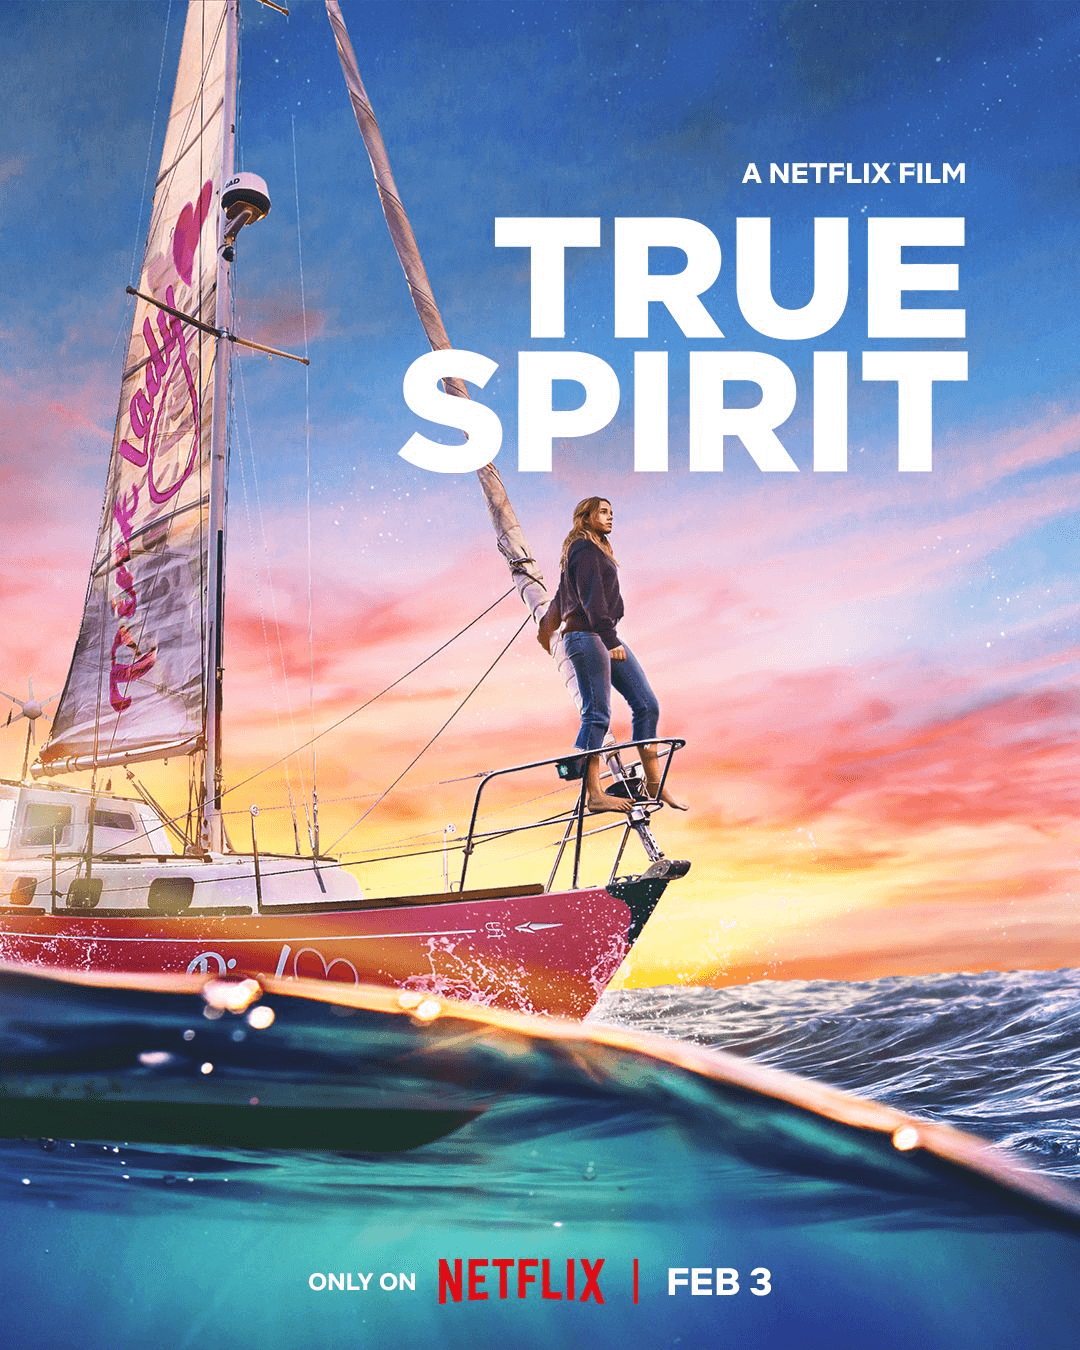 true spirit poster netflix movie coming to netflix in february 2023